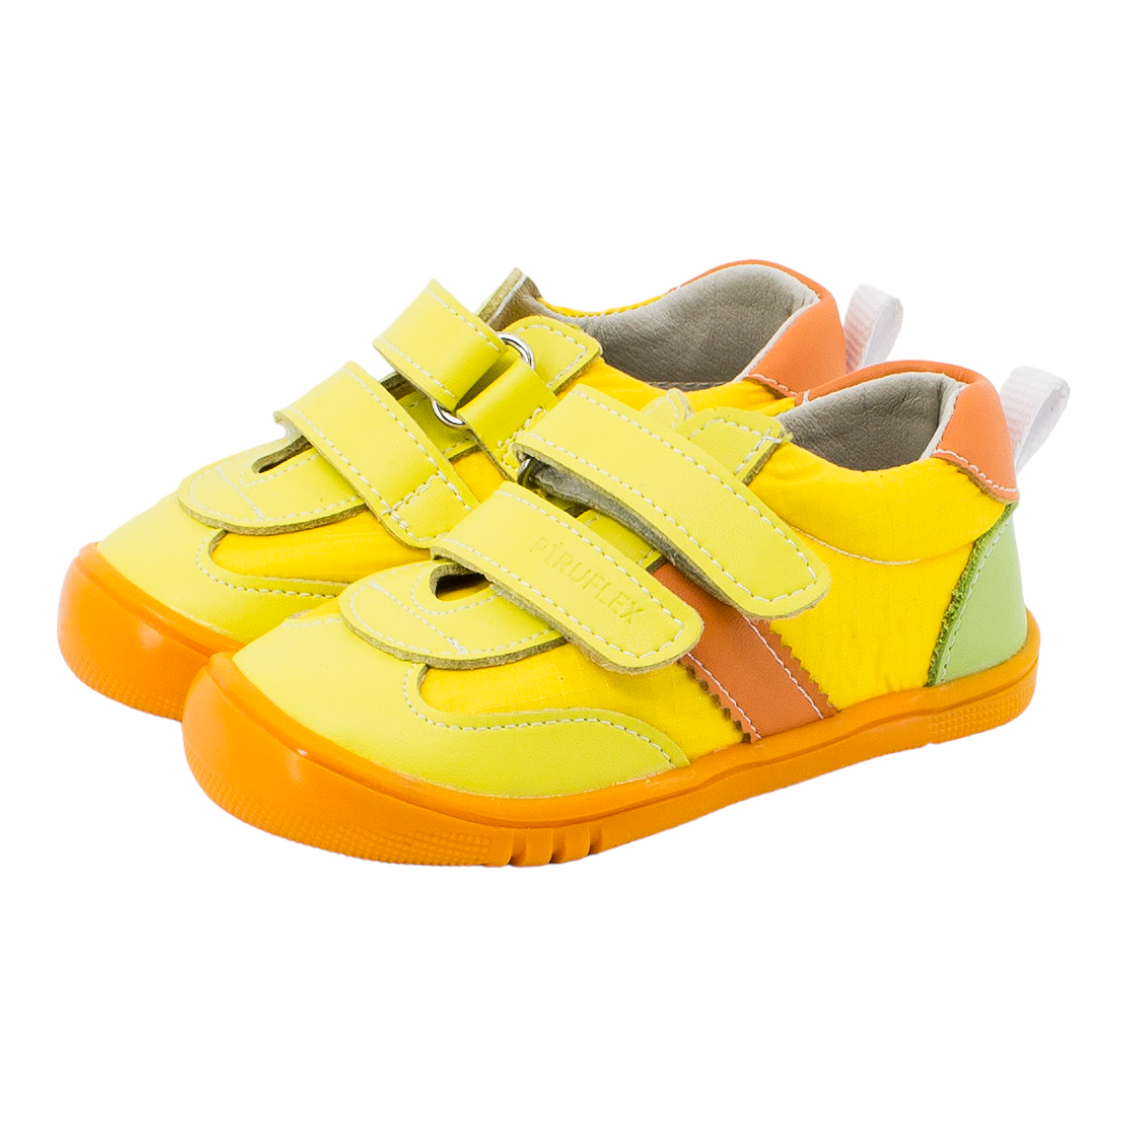 Zapato respetuoso vegano amarillo y naranja